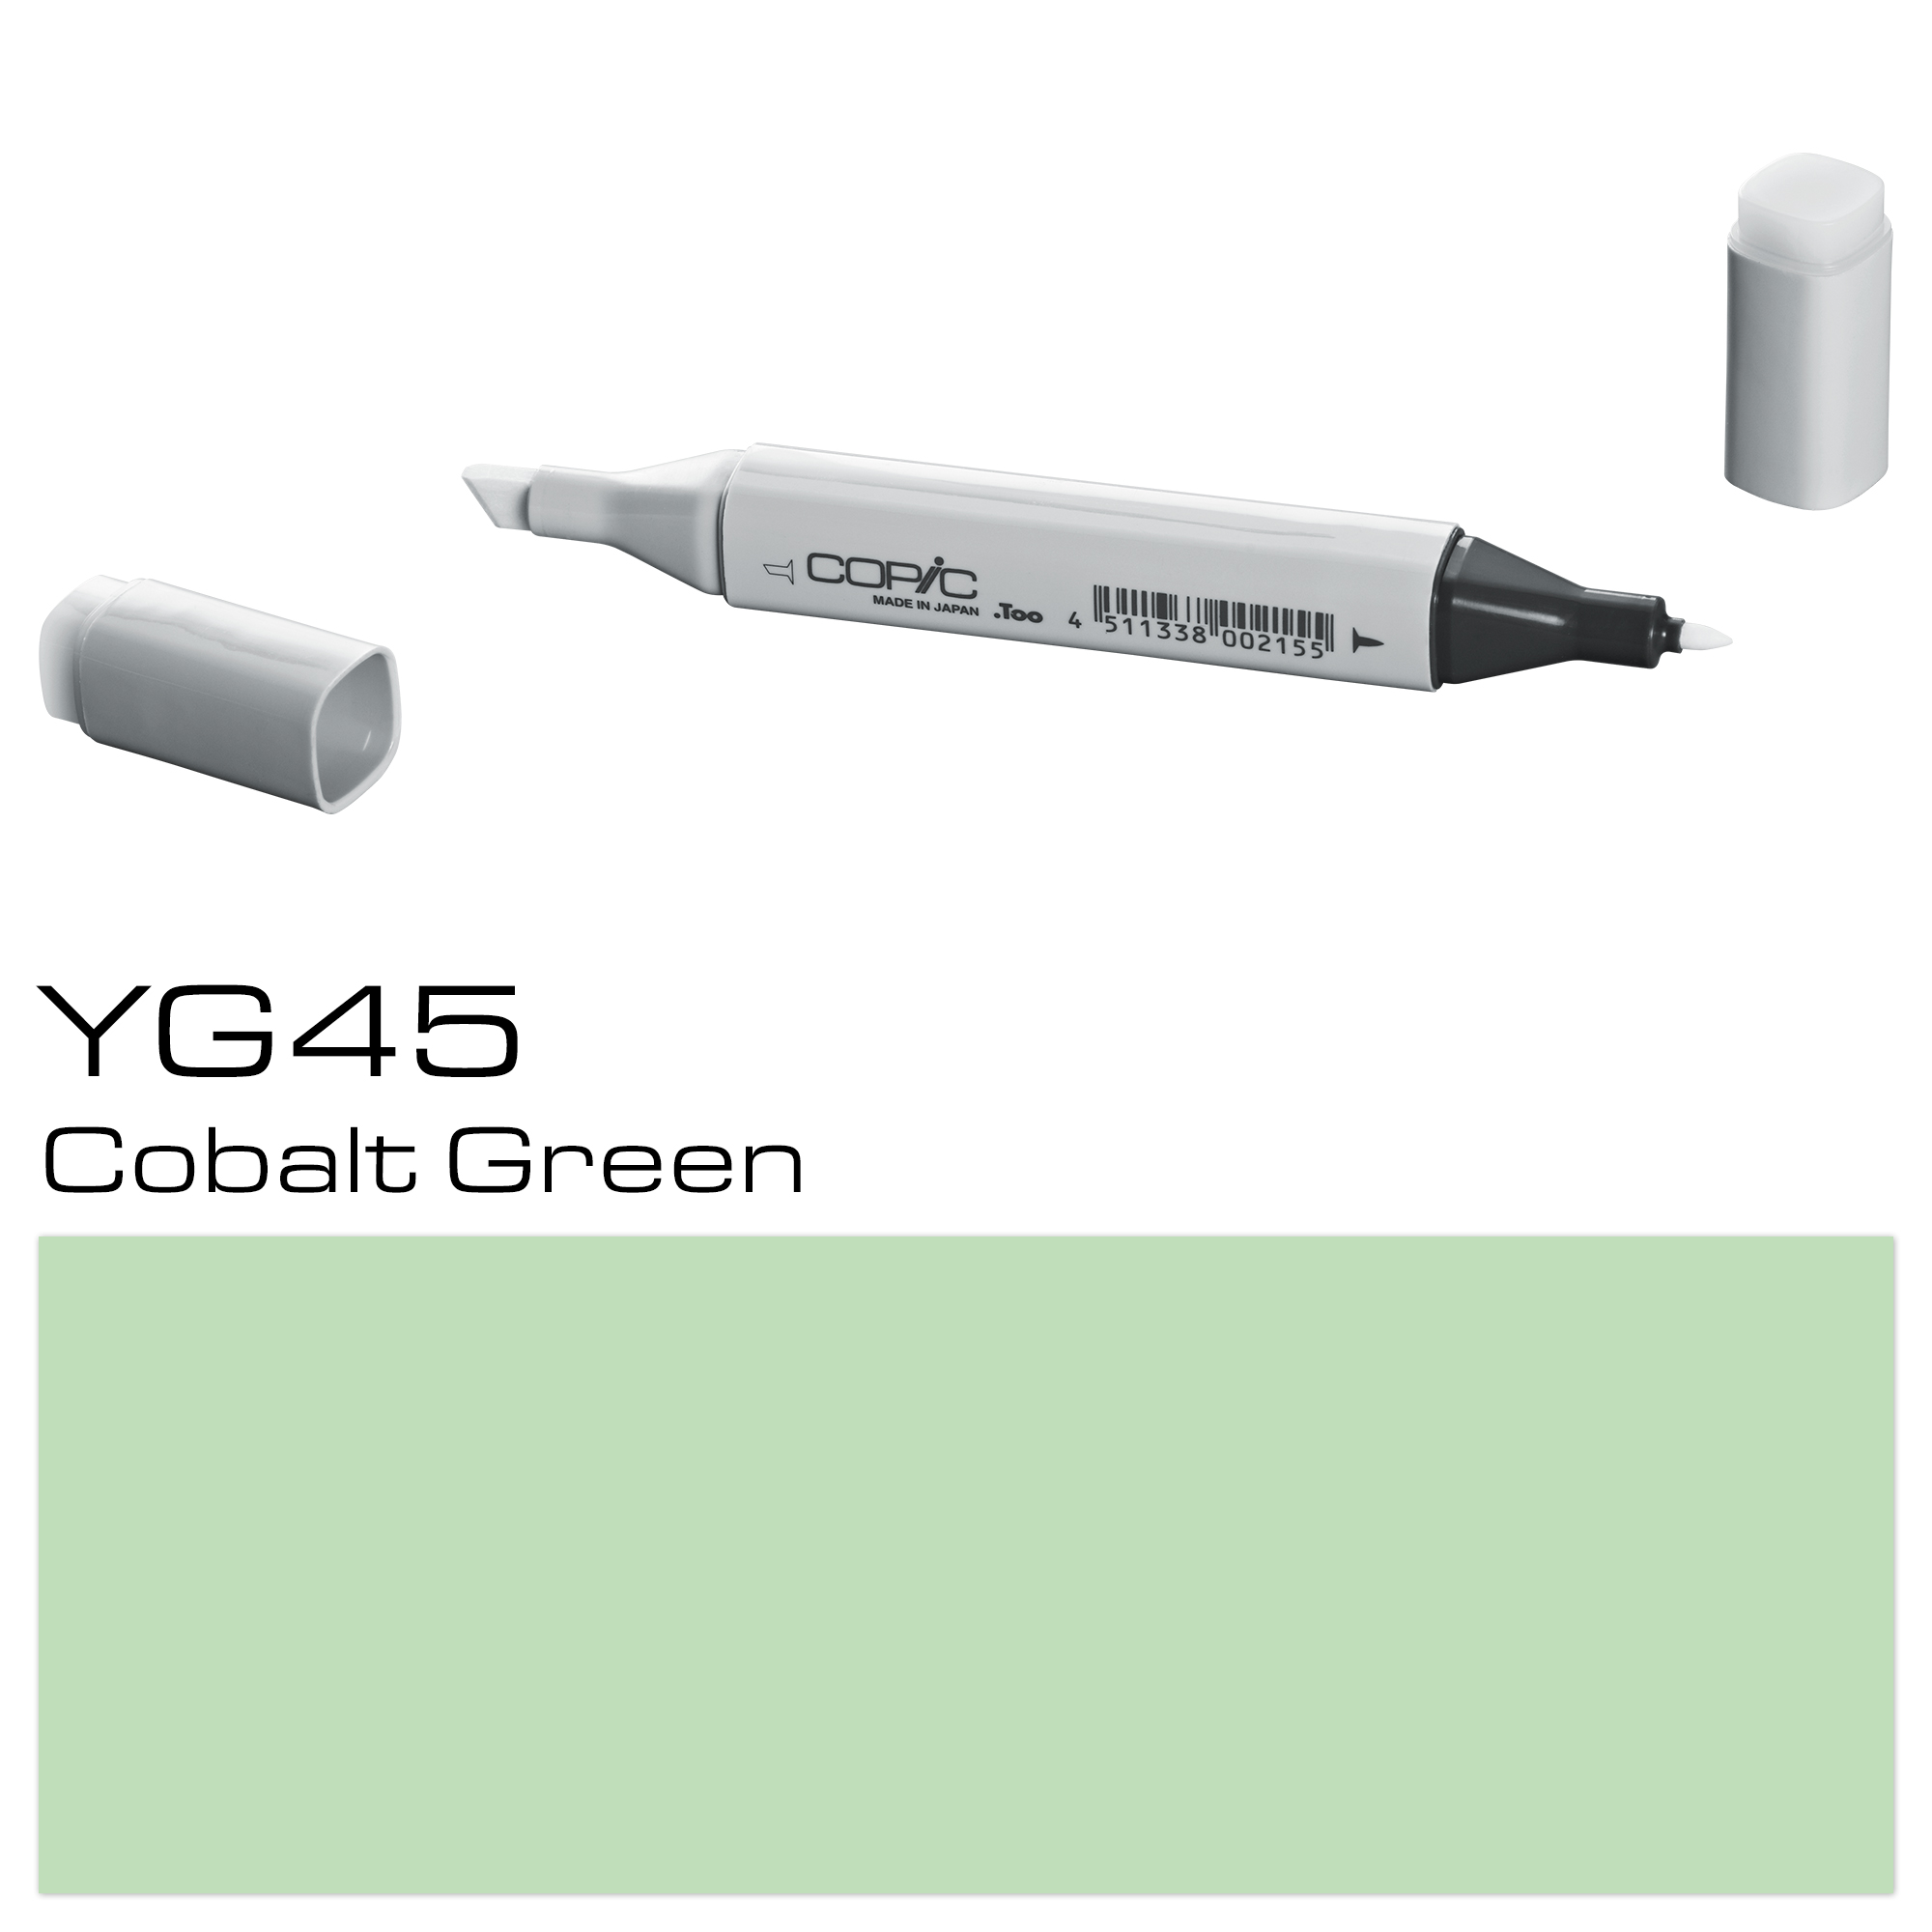 COPIC MARKER COBALT GREEN YG45